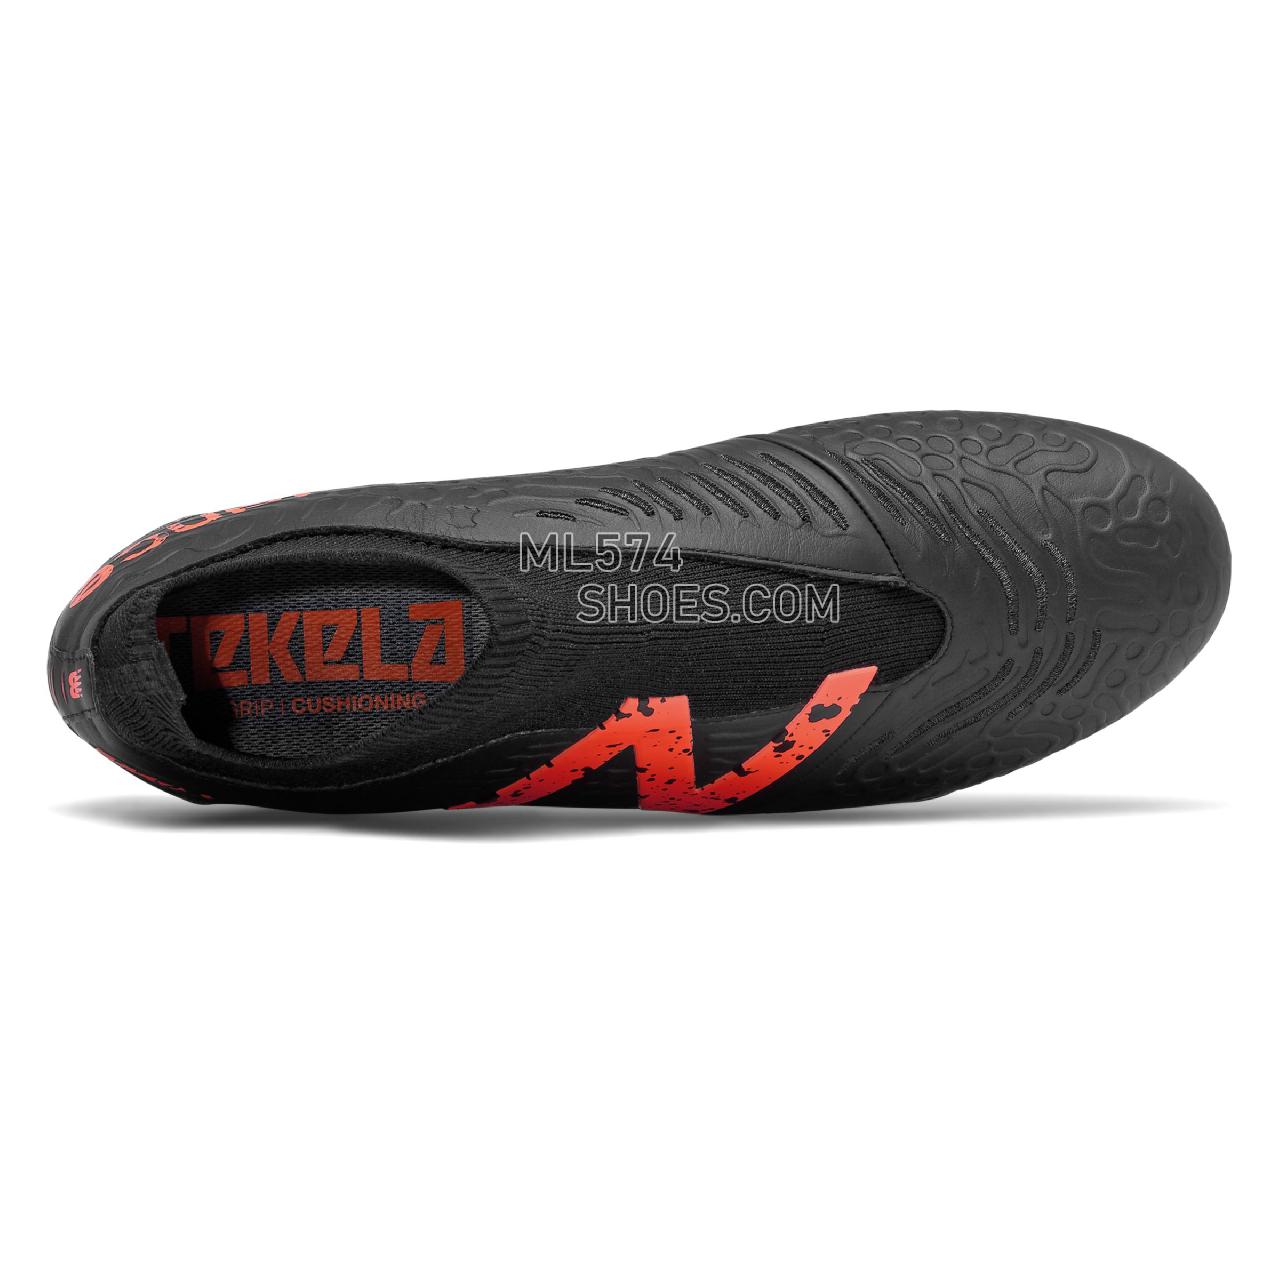 New Balance Tekela V3 Pro Leather FG - Men's Soccer - Black with Dynomite - MSTKFBD3